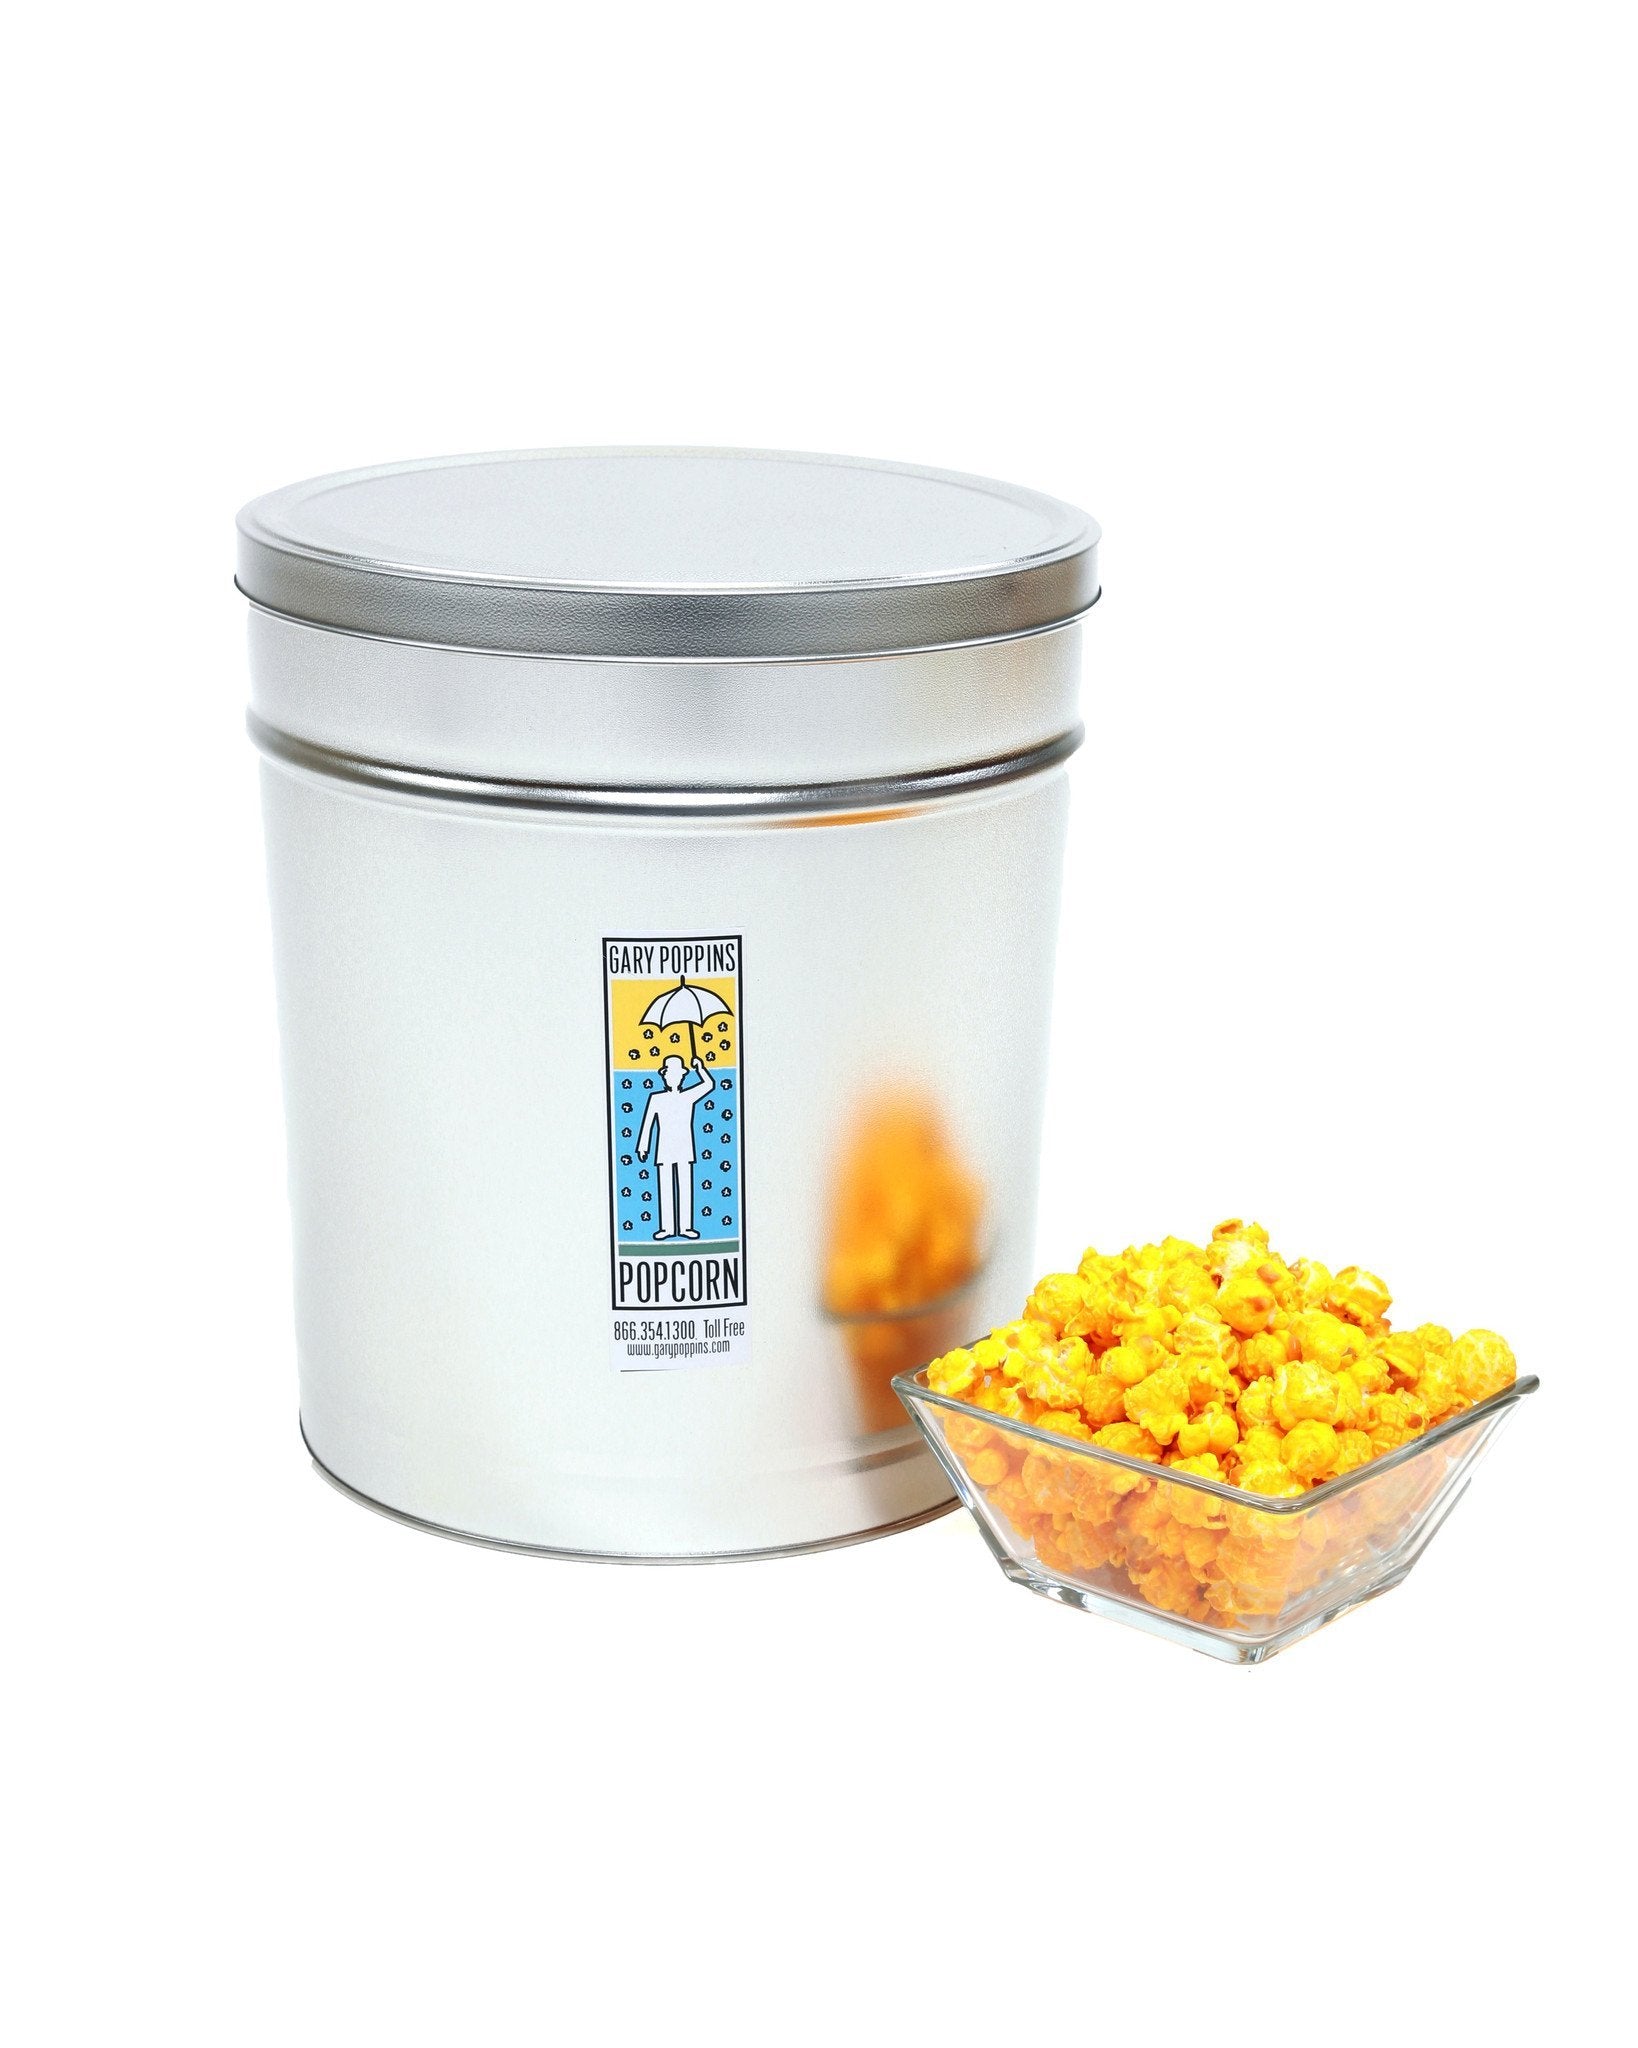 Classic Cheddar - Gourmet Popcorn - 3.5 Gallon Tin